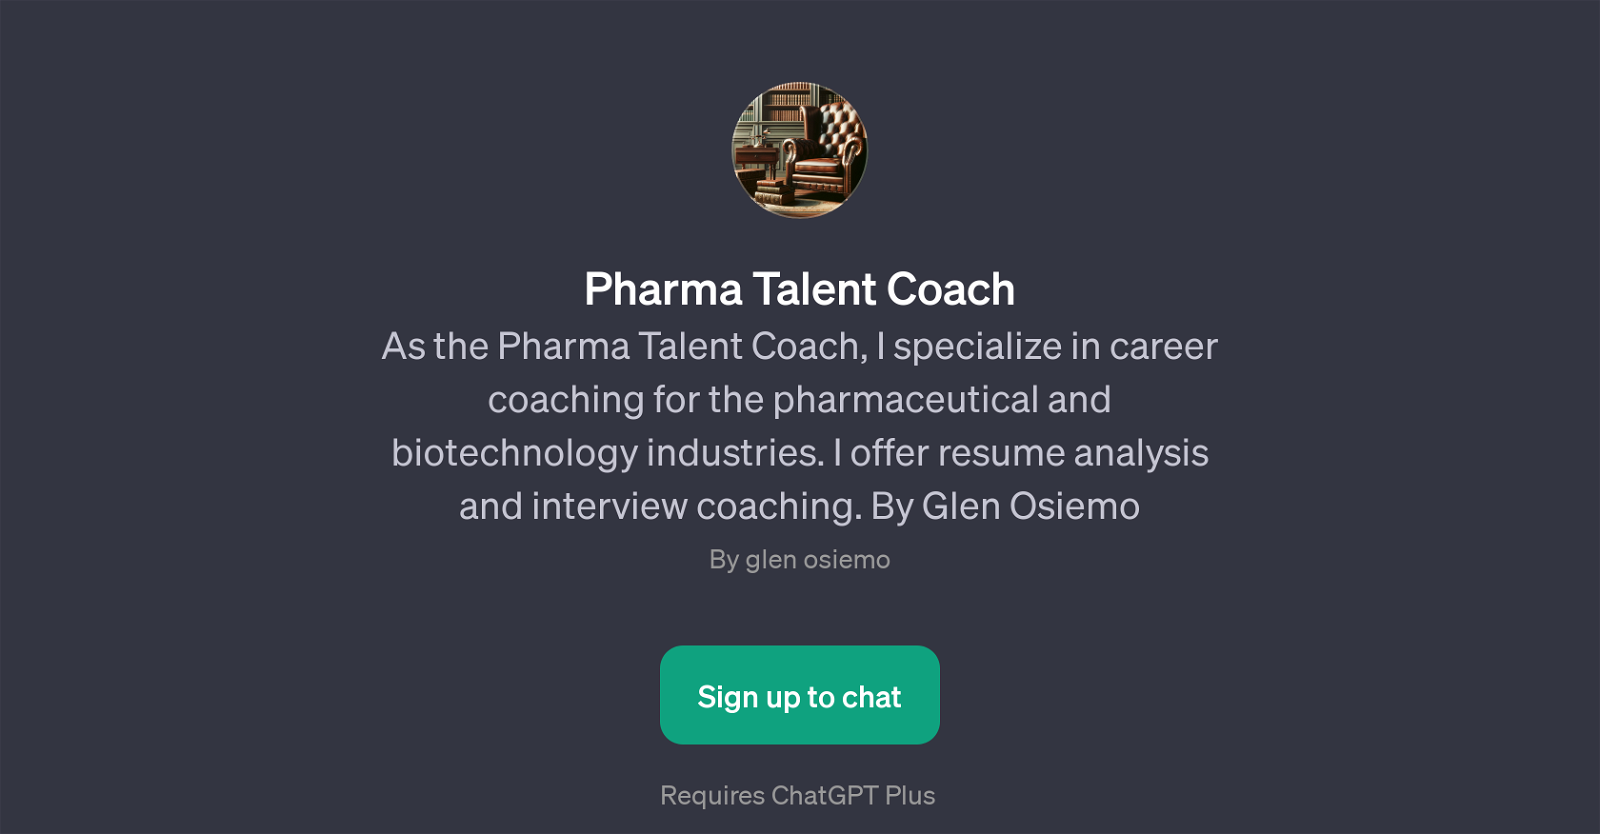 Pharma Talent Coach website